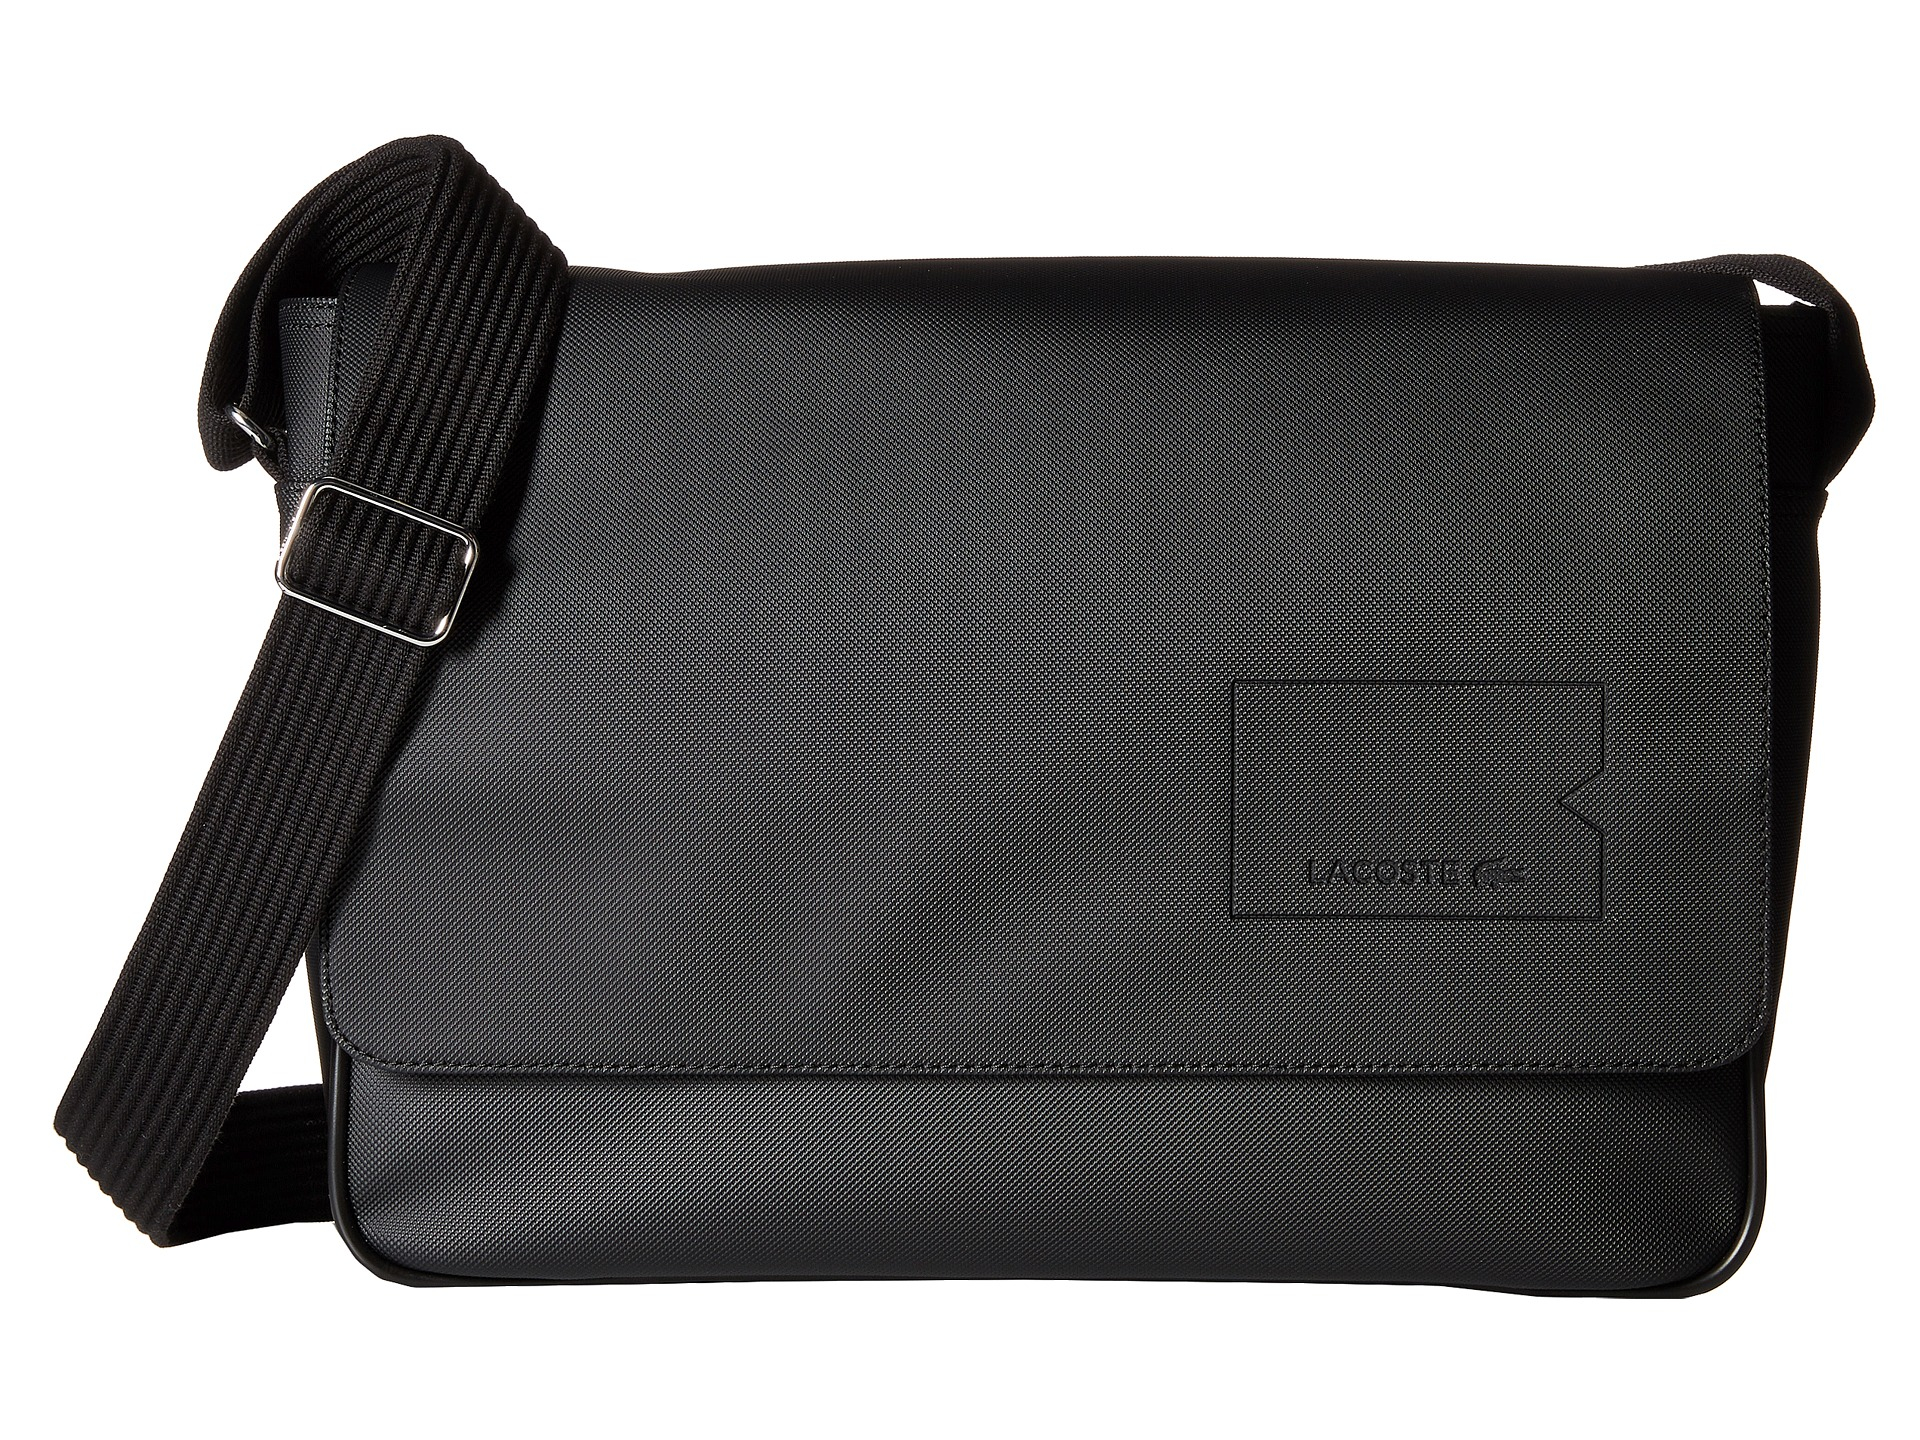 Lacoste Black Small Messenger Bag